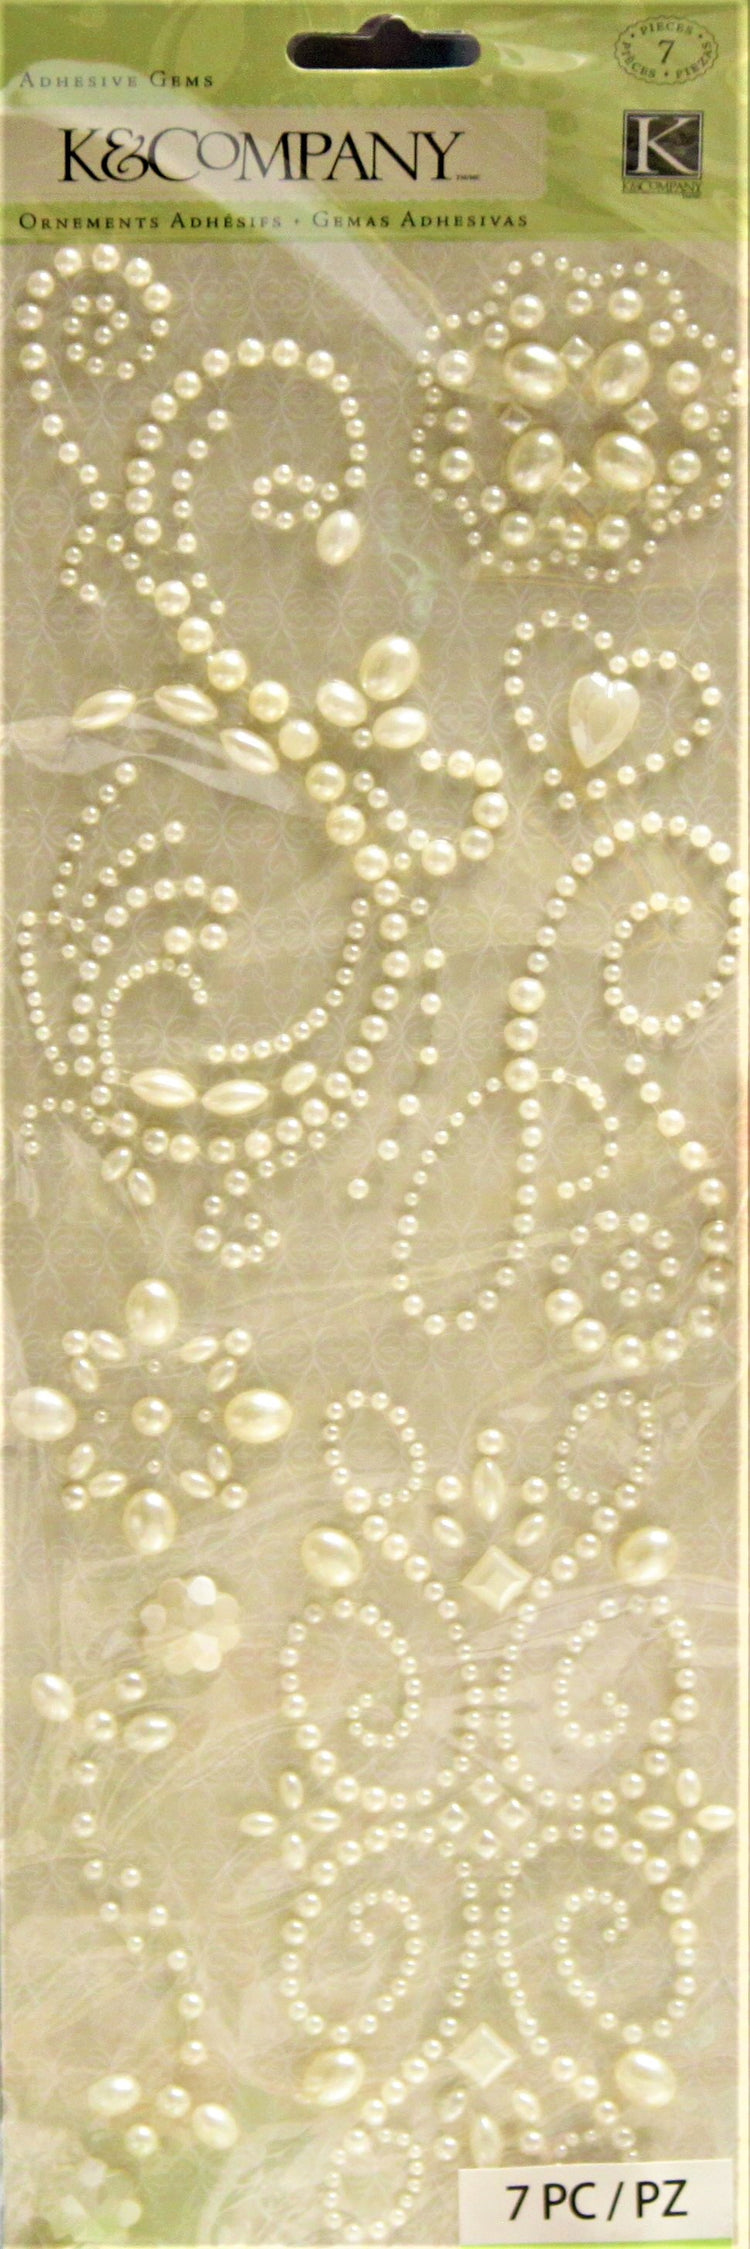 K & Company Large Pearl Swirl Self-Adhesive Gems